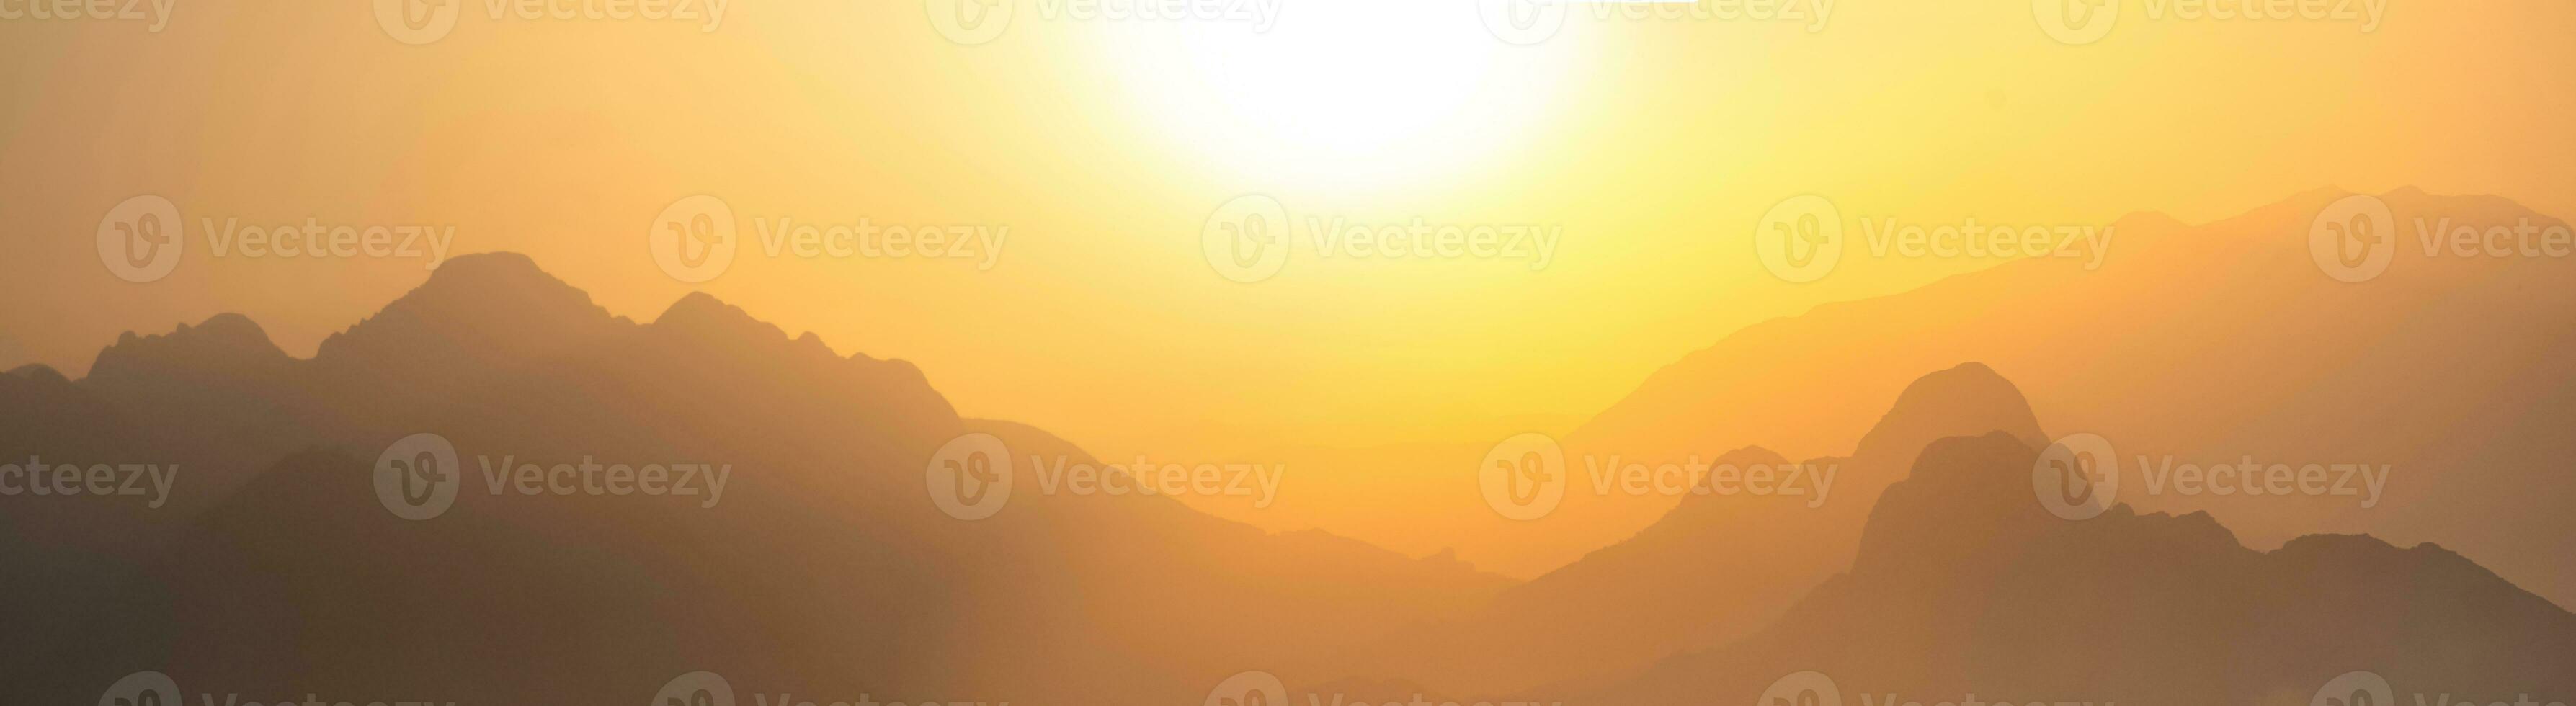 arancia panorama - nebbioso montagne a tramonto foto